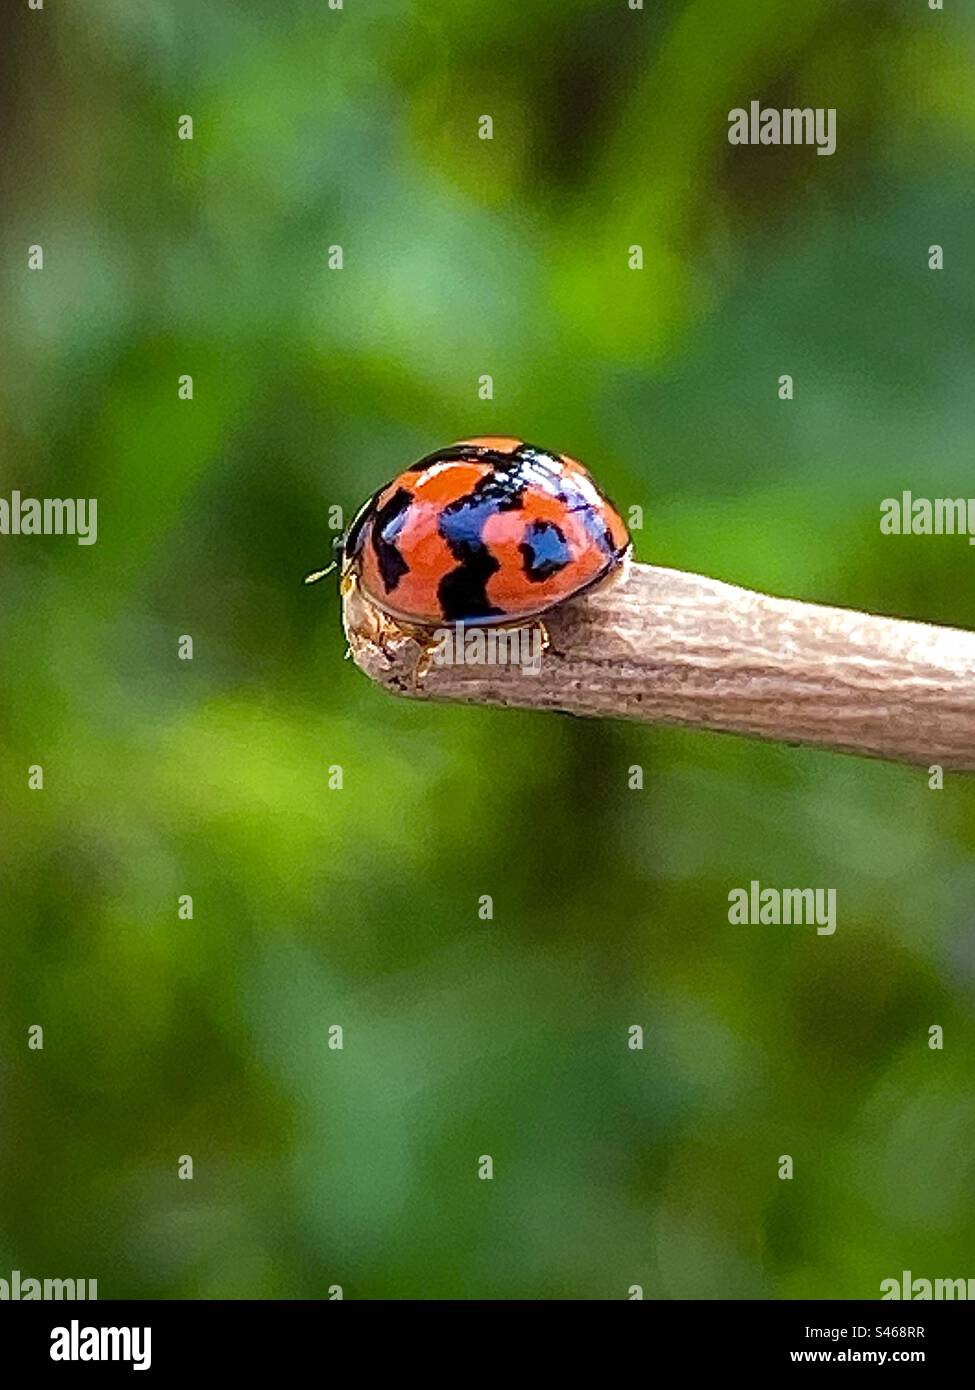 Ladybug Clipart Cute Ladybug Png Bug Clipart Love Bug -  Denmark